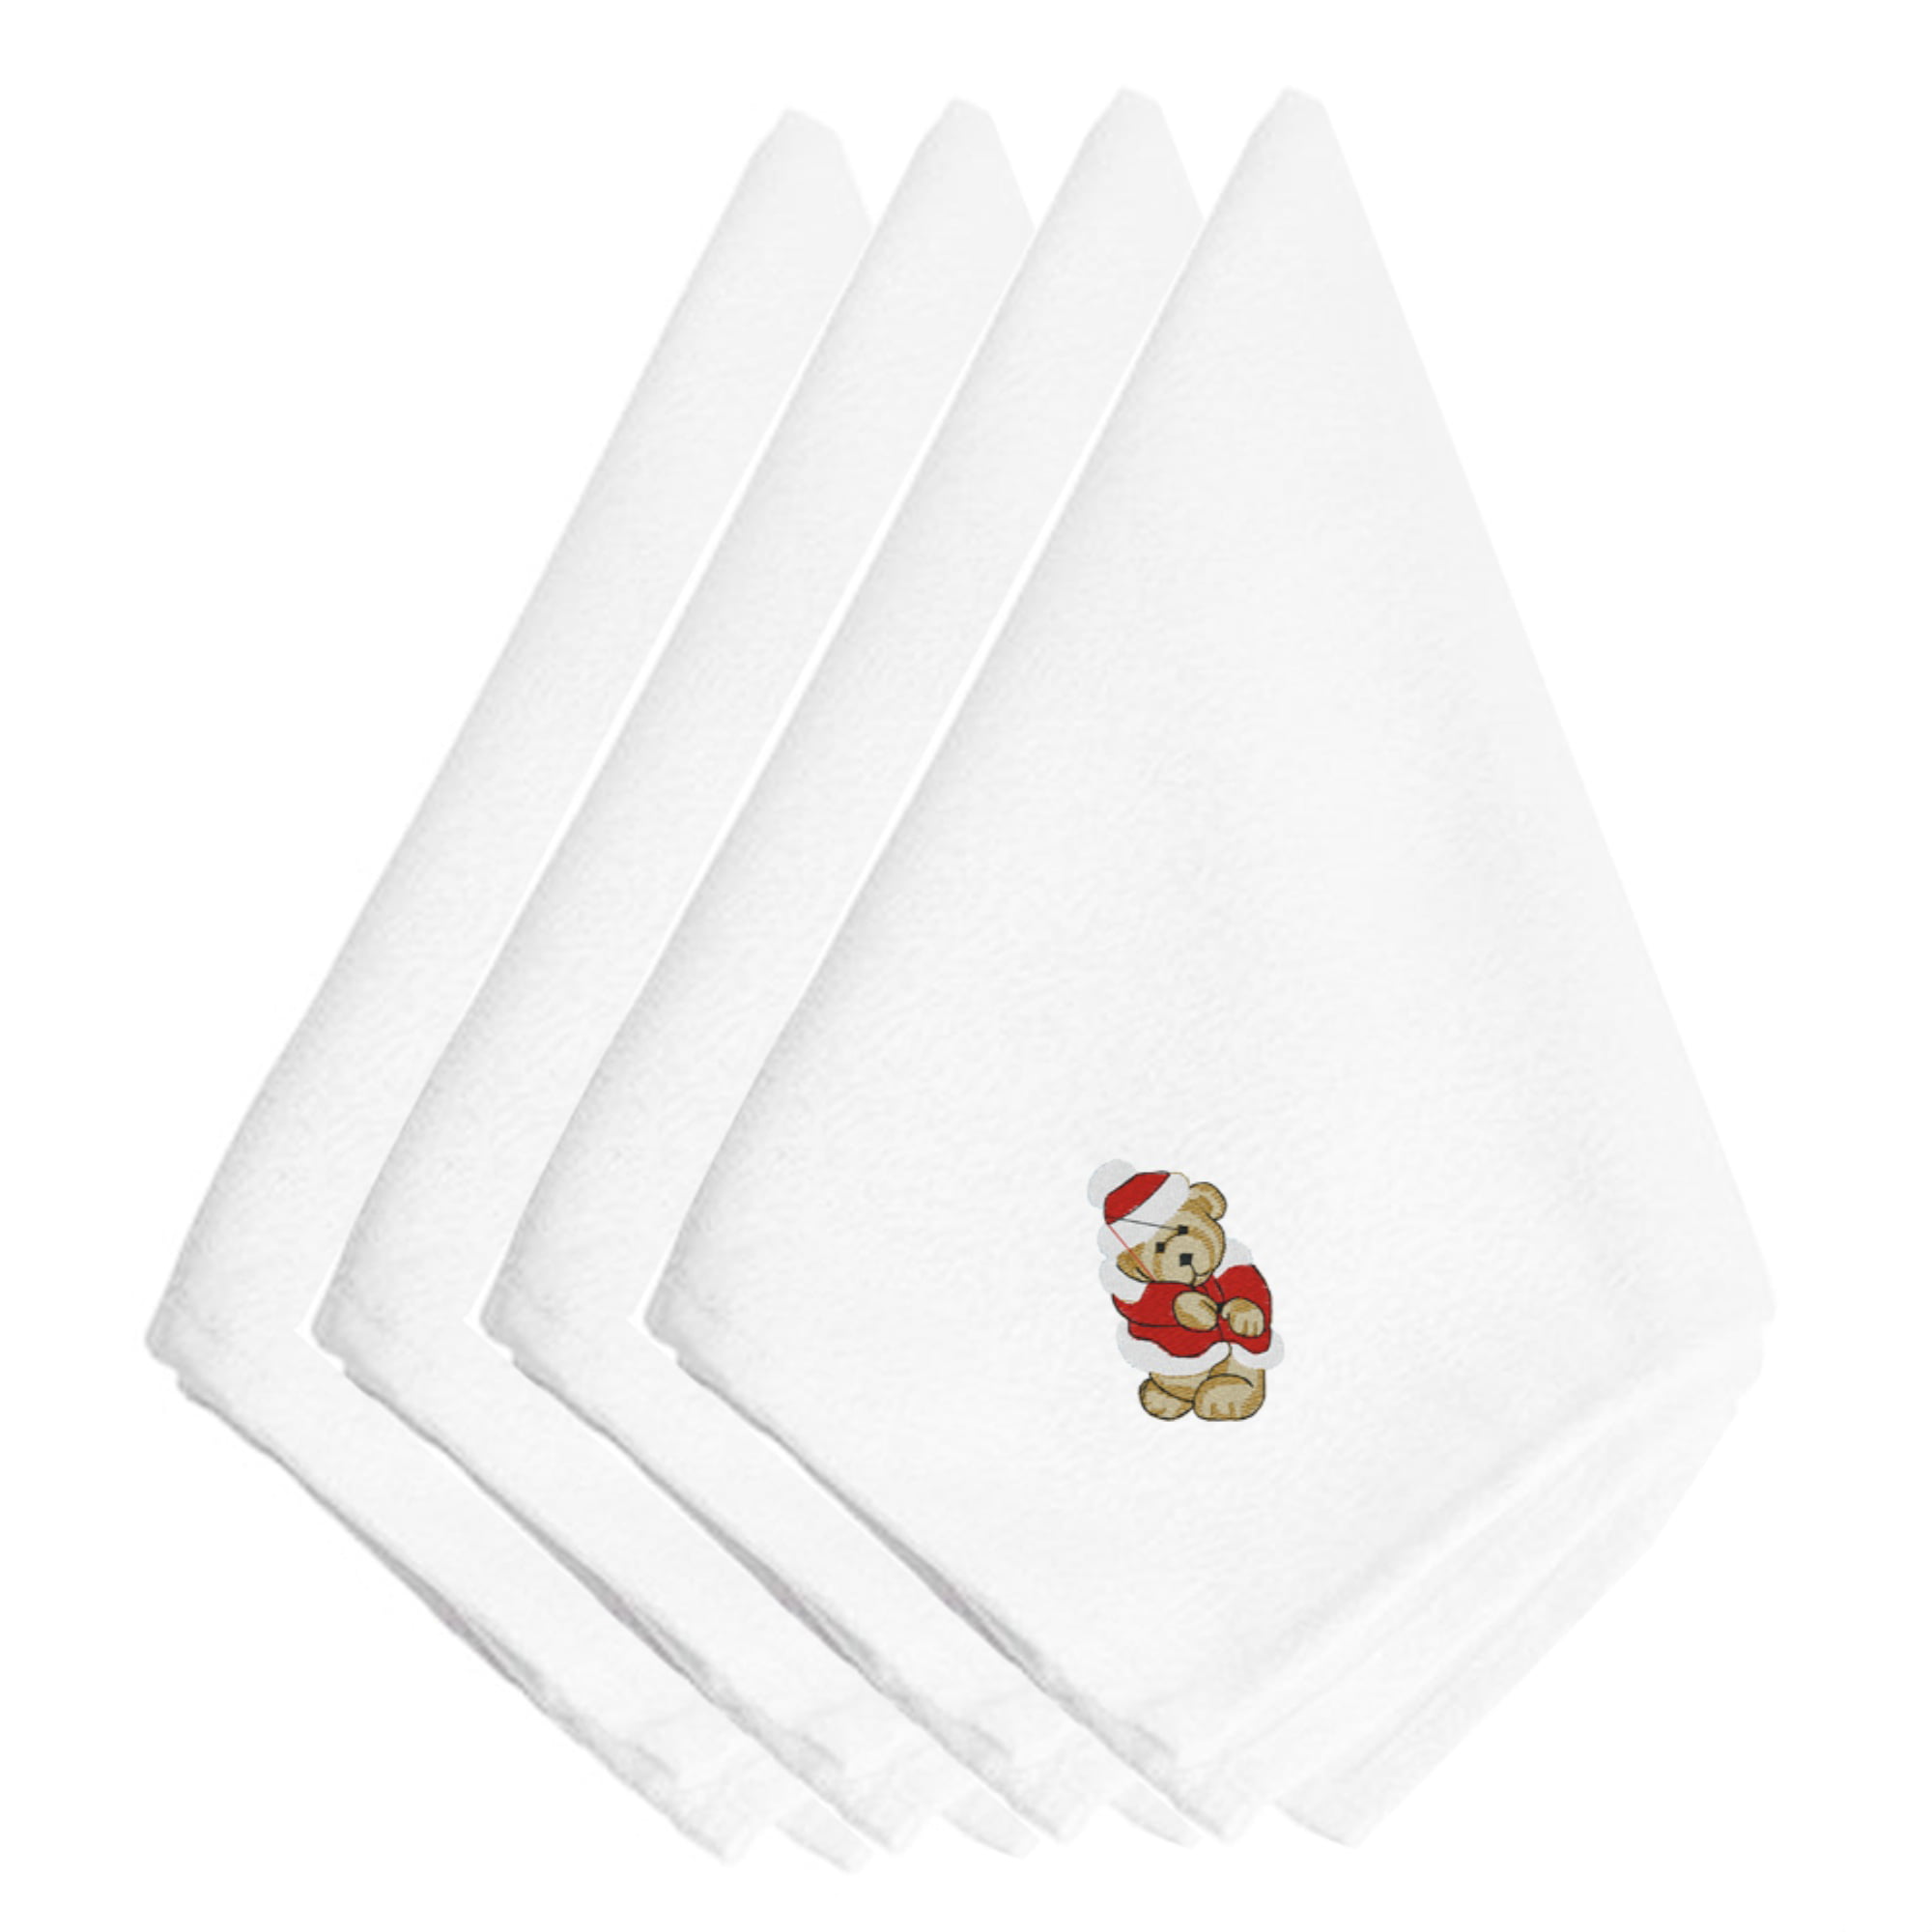 20 Paper Party Napkins Santa Interior Pack of 20 3 Ply Tissue Serviettes